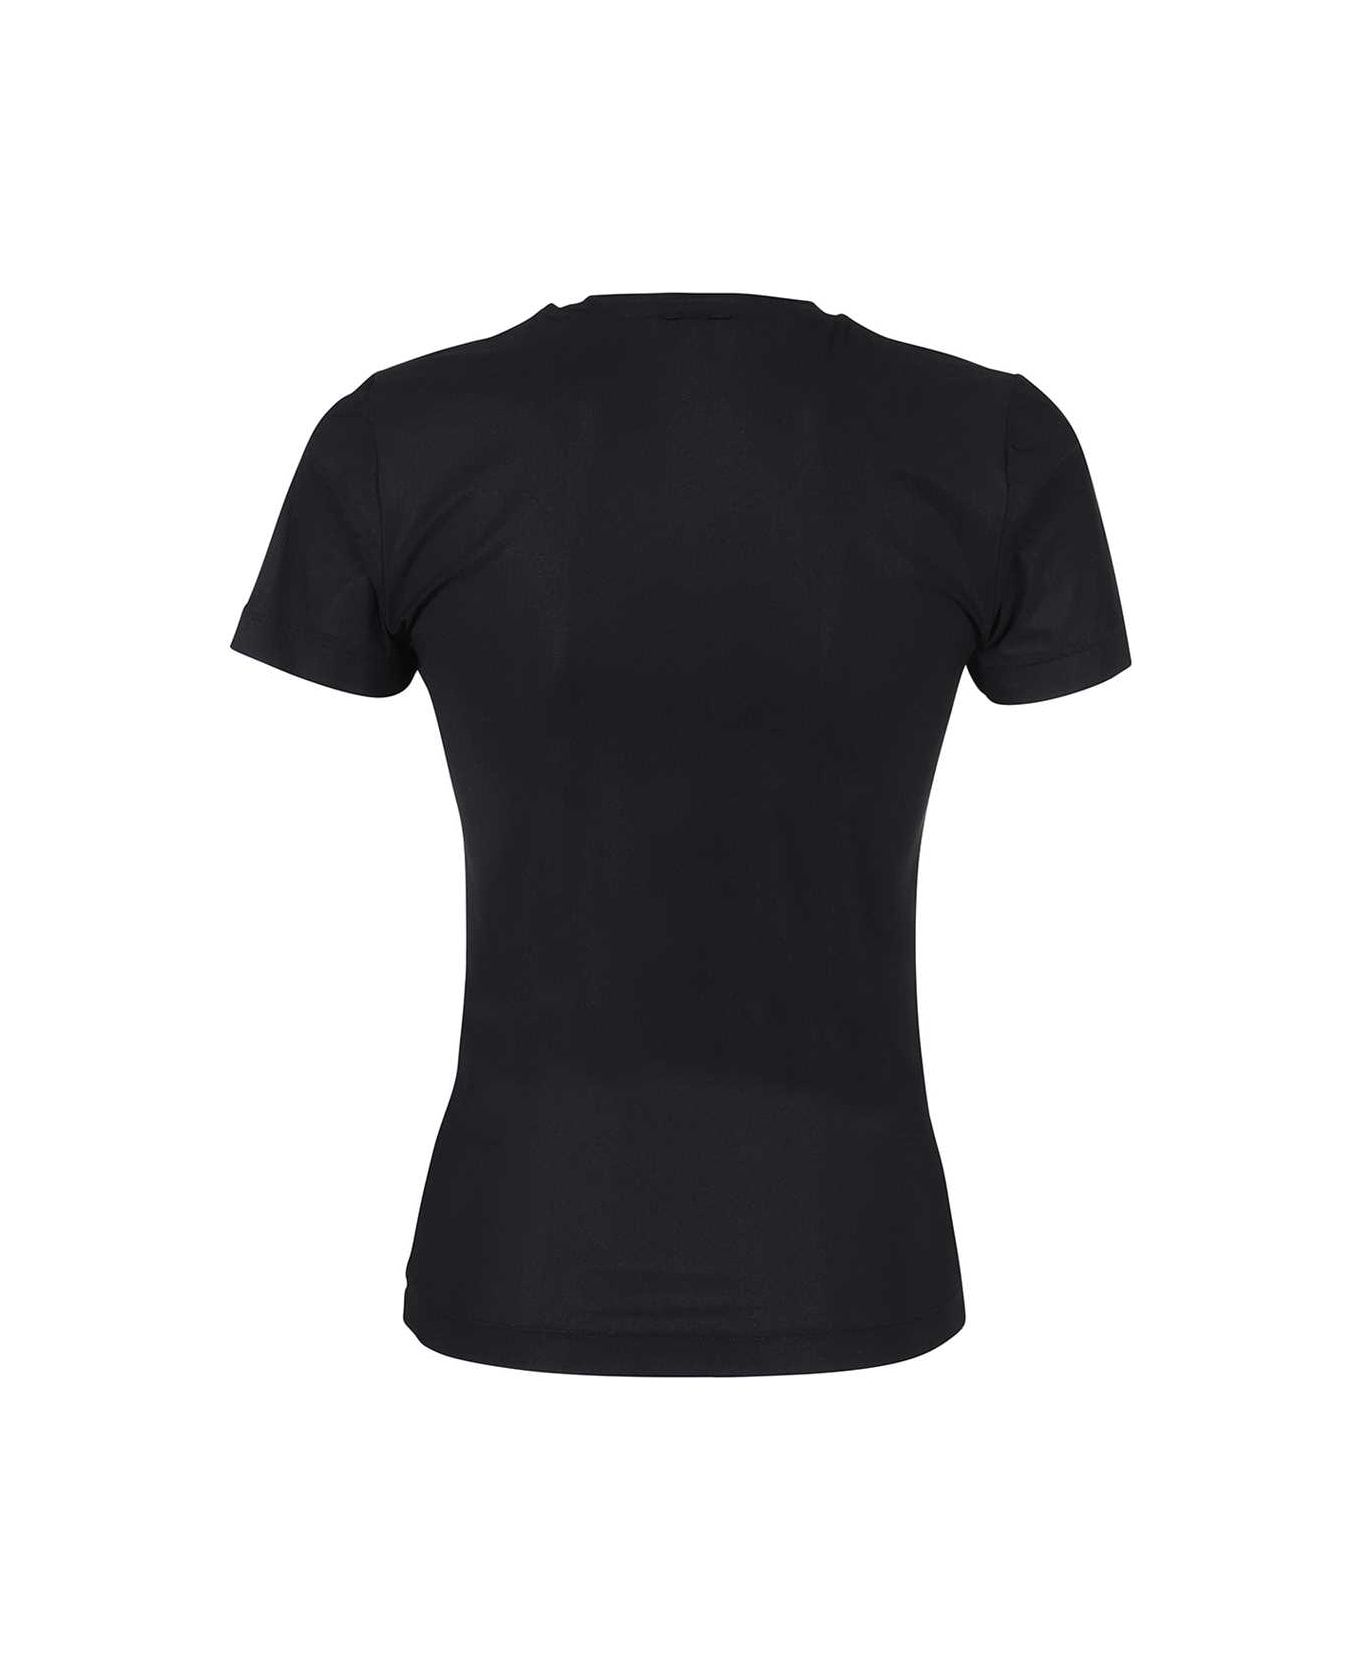 Eytys Short Sleeve Printed Cotton T-shirt - black Tシャツ